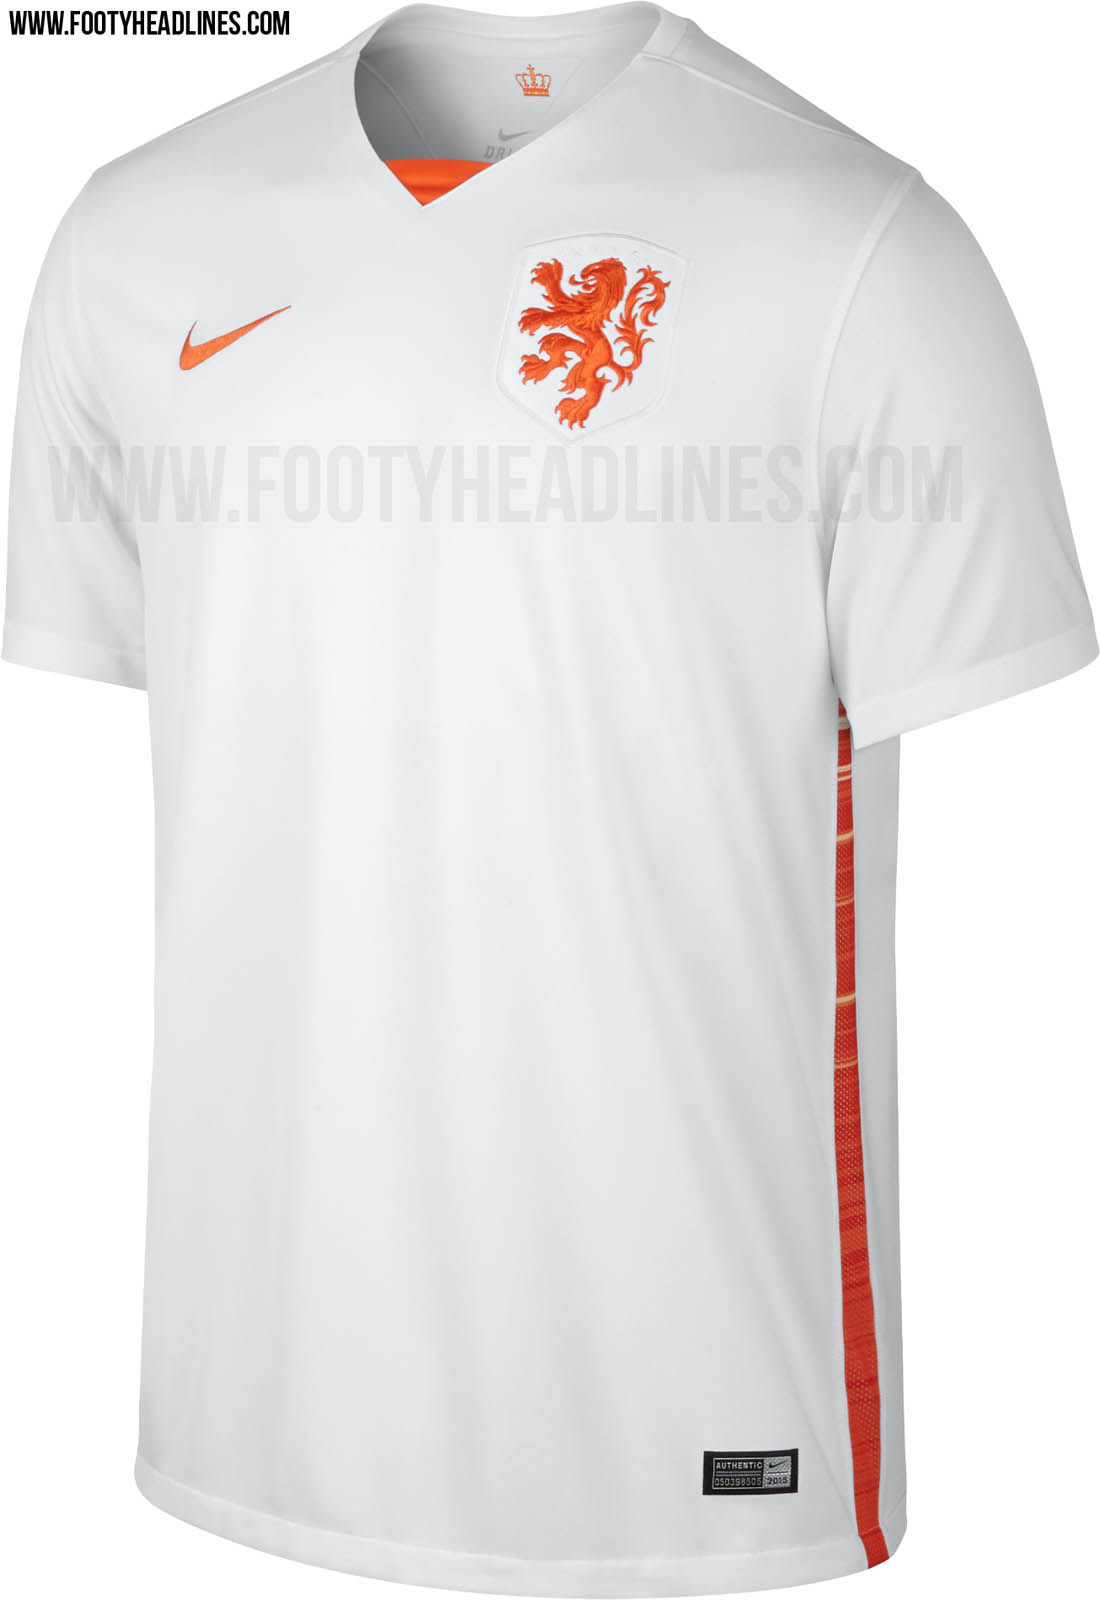 Nike Netherlands 2015 Away Kit Released - Footy Headlines